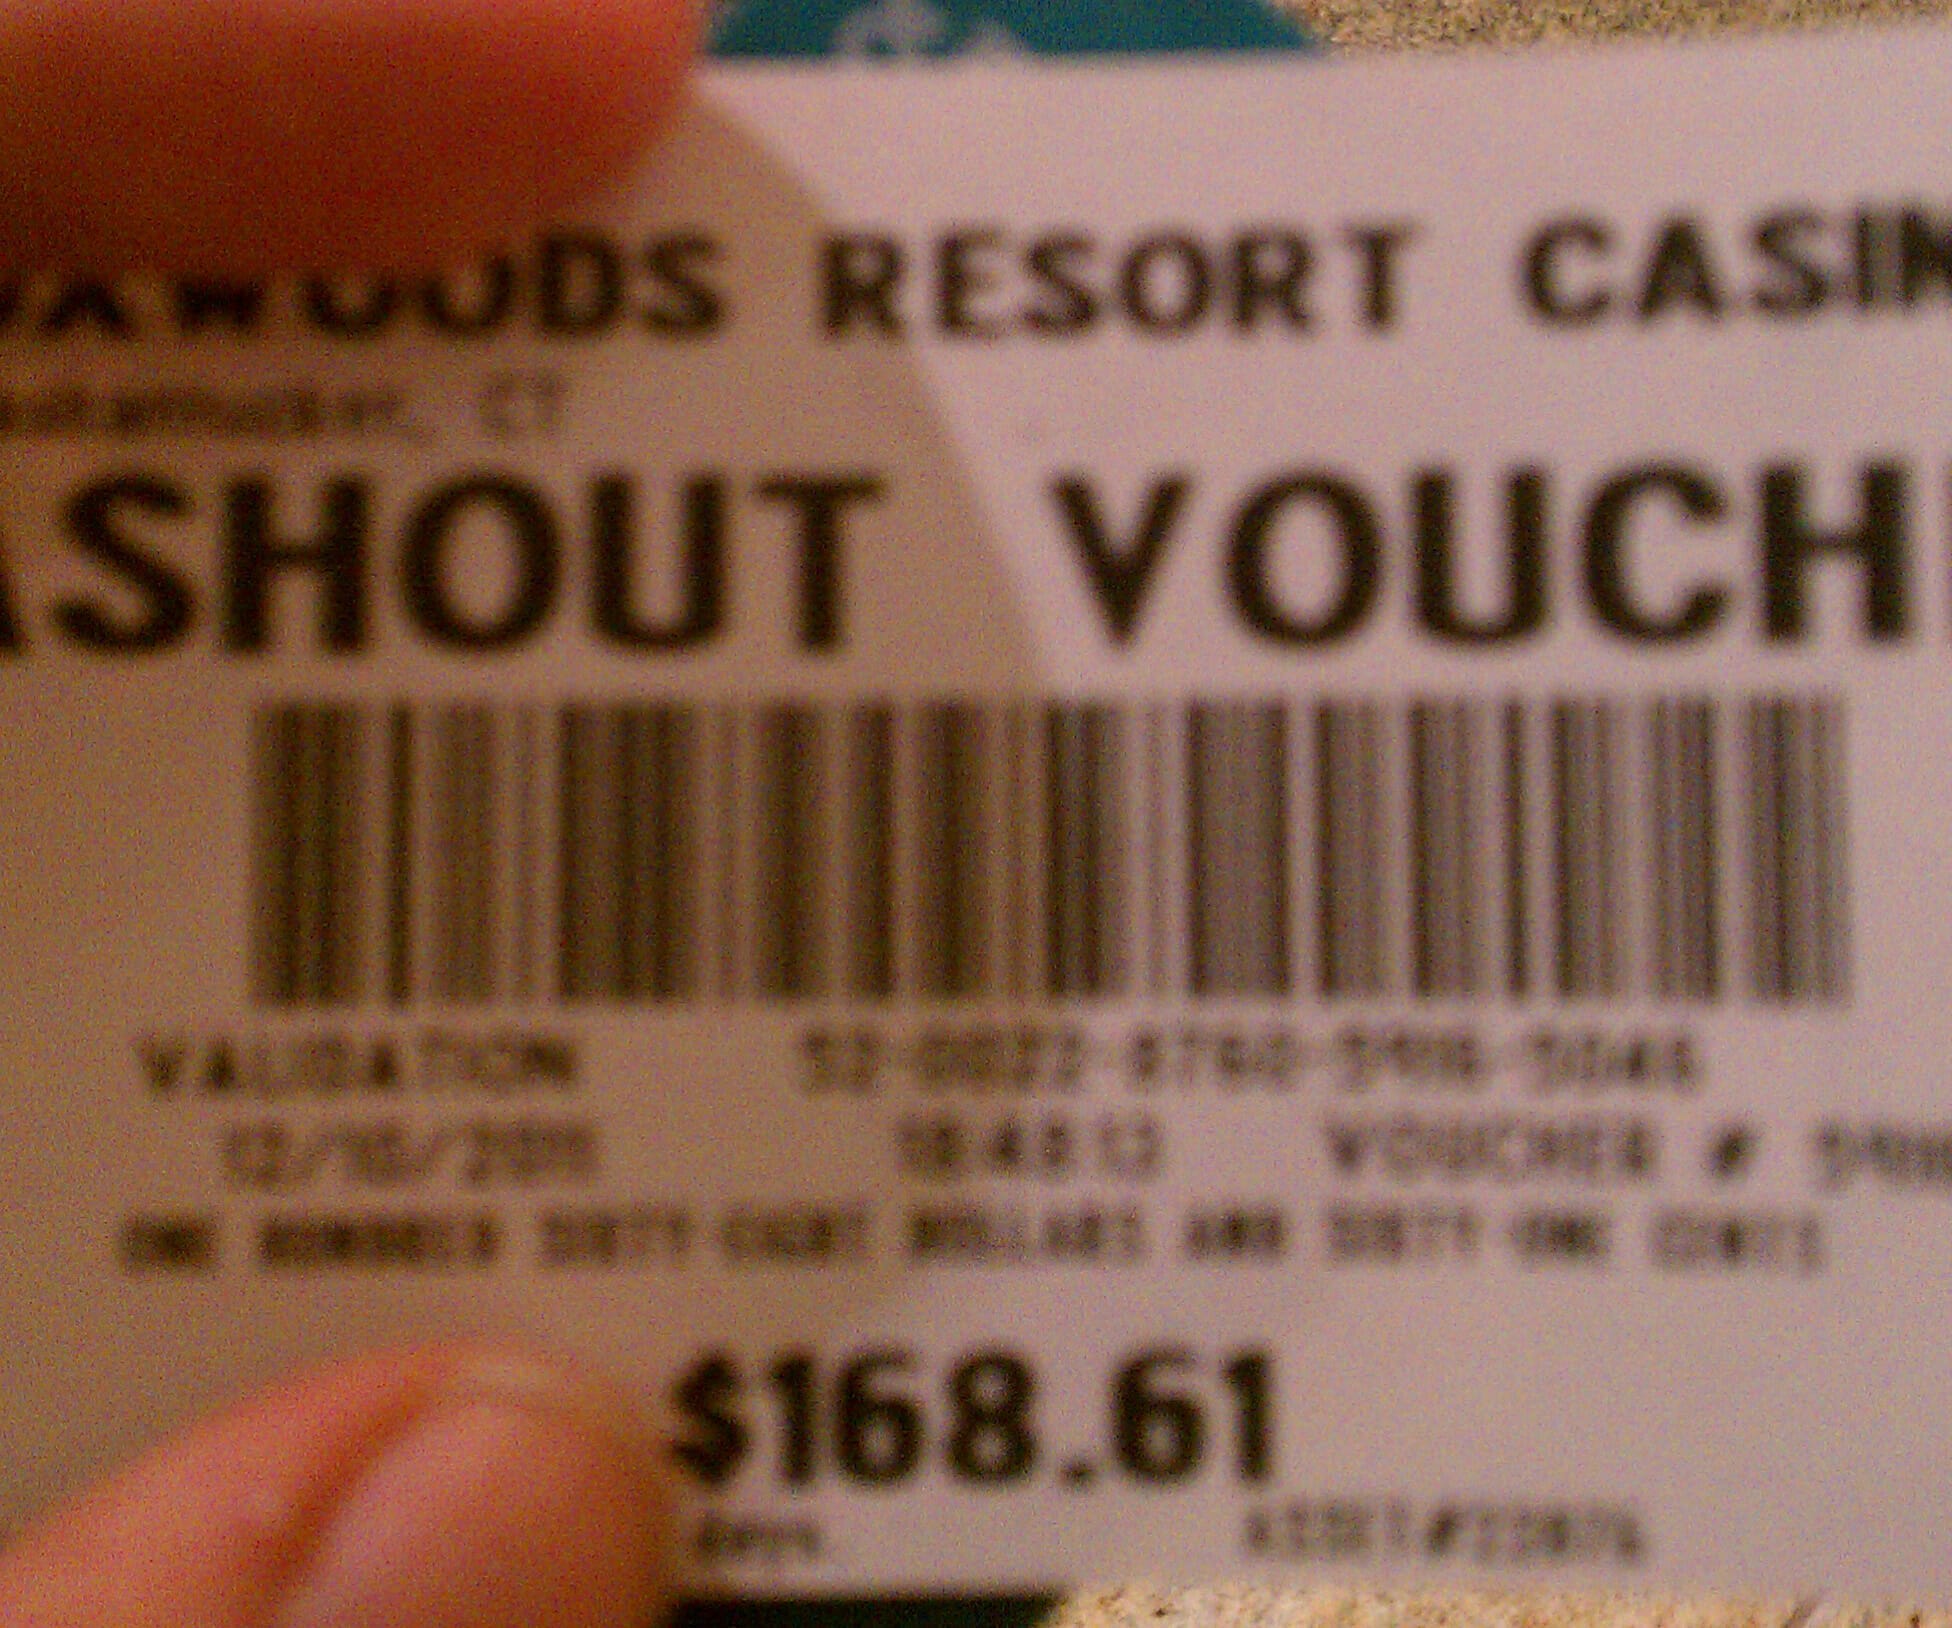 snoqualmie casino tiers